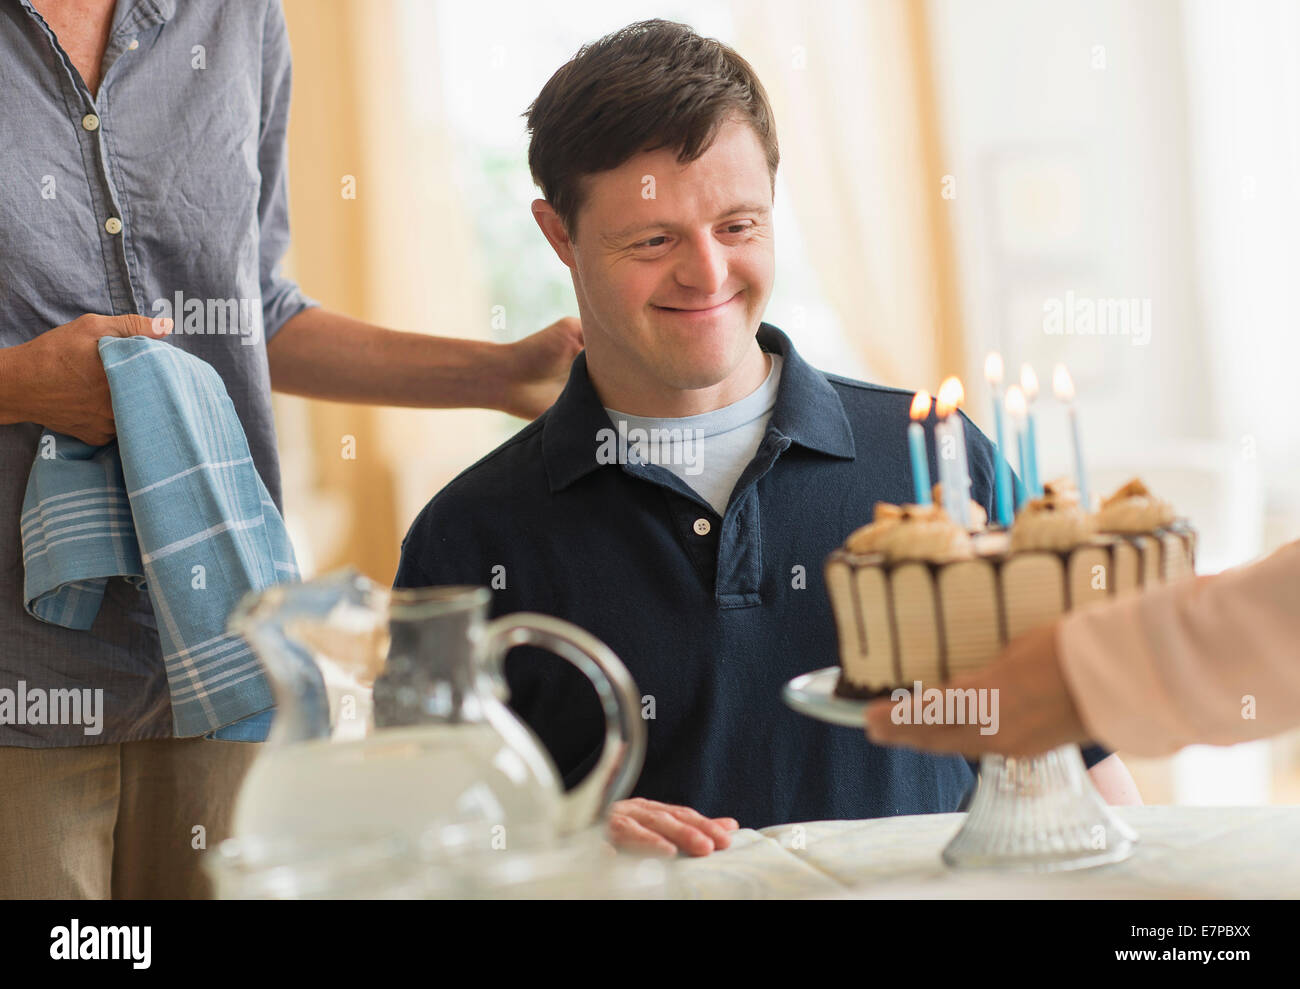 Man with down syndrome celebrating birthday Stock Photo